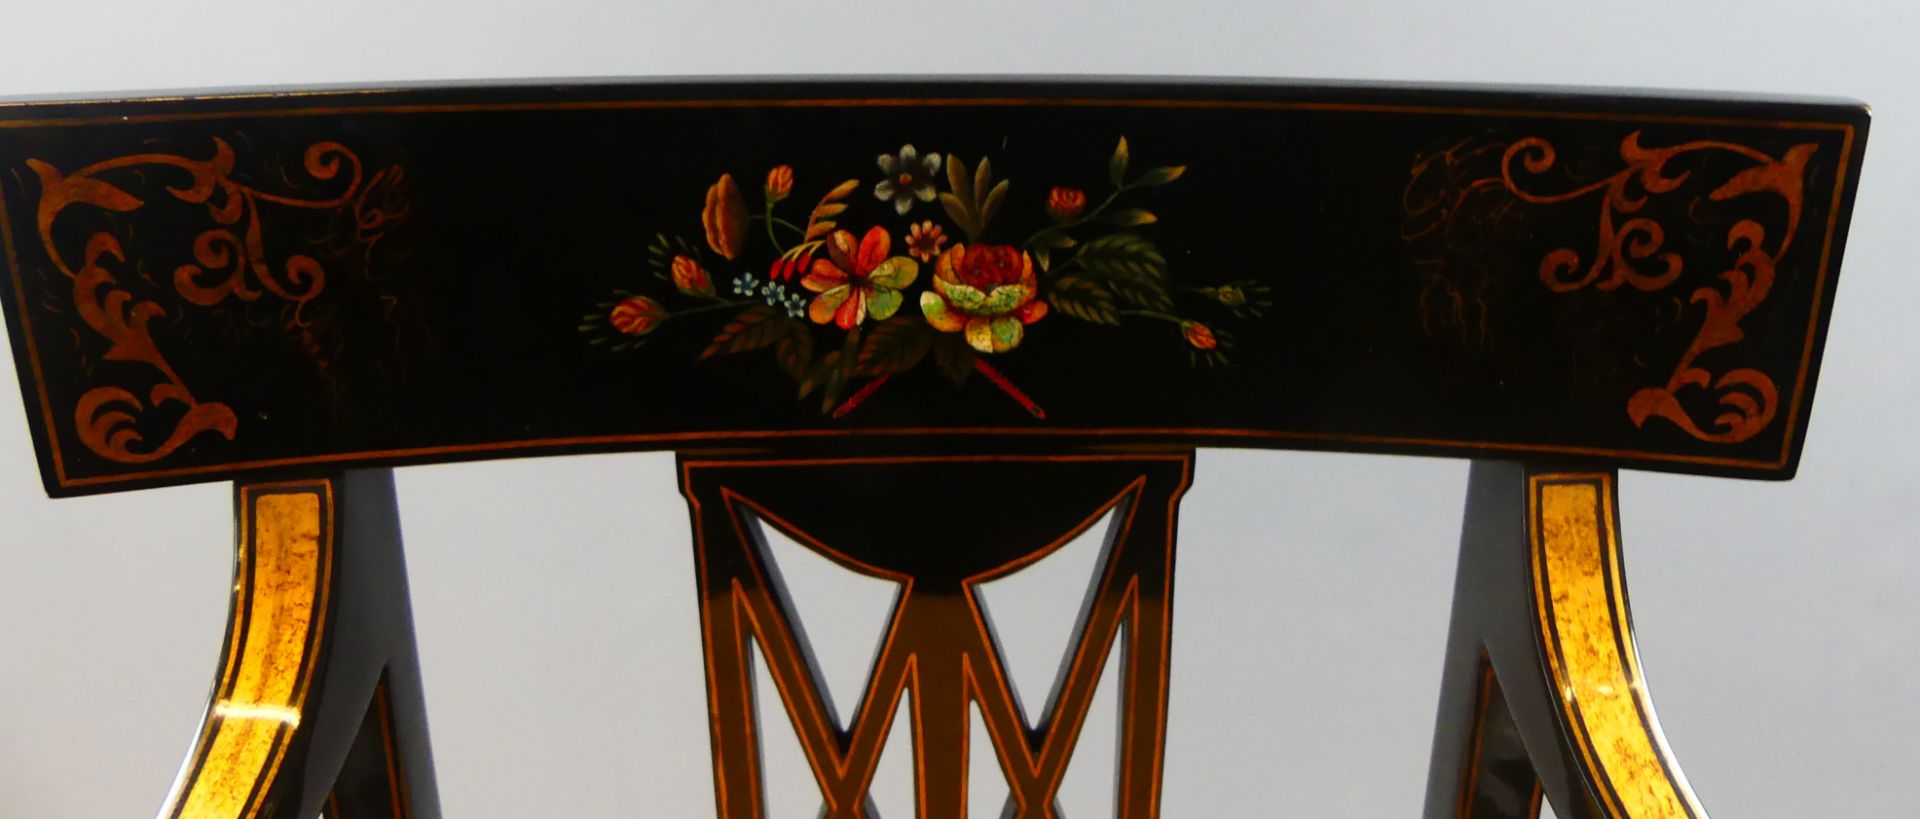 Armlehnstuhl, Blumenbemalung, lackiert, Peddigrohrsitz, Rückenhöhe ca. 89 cm - Image 2 of 5